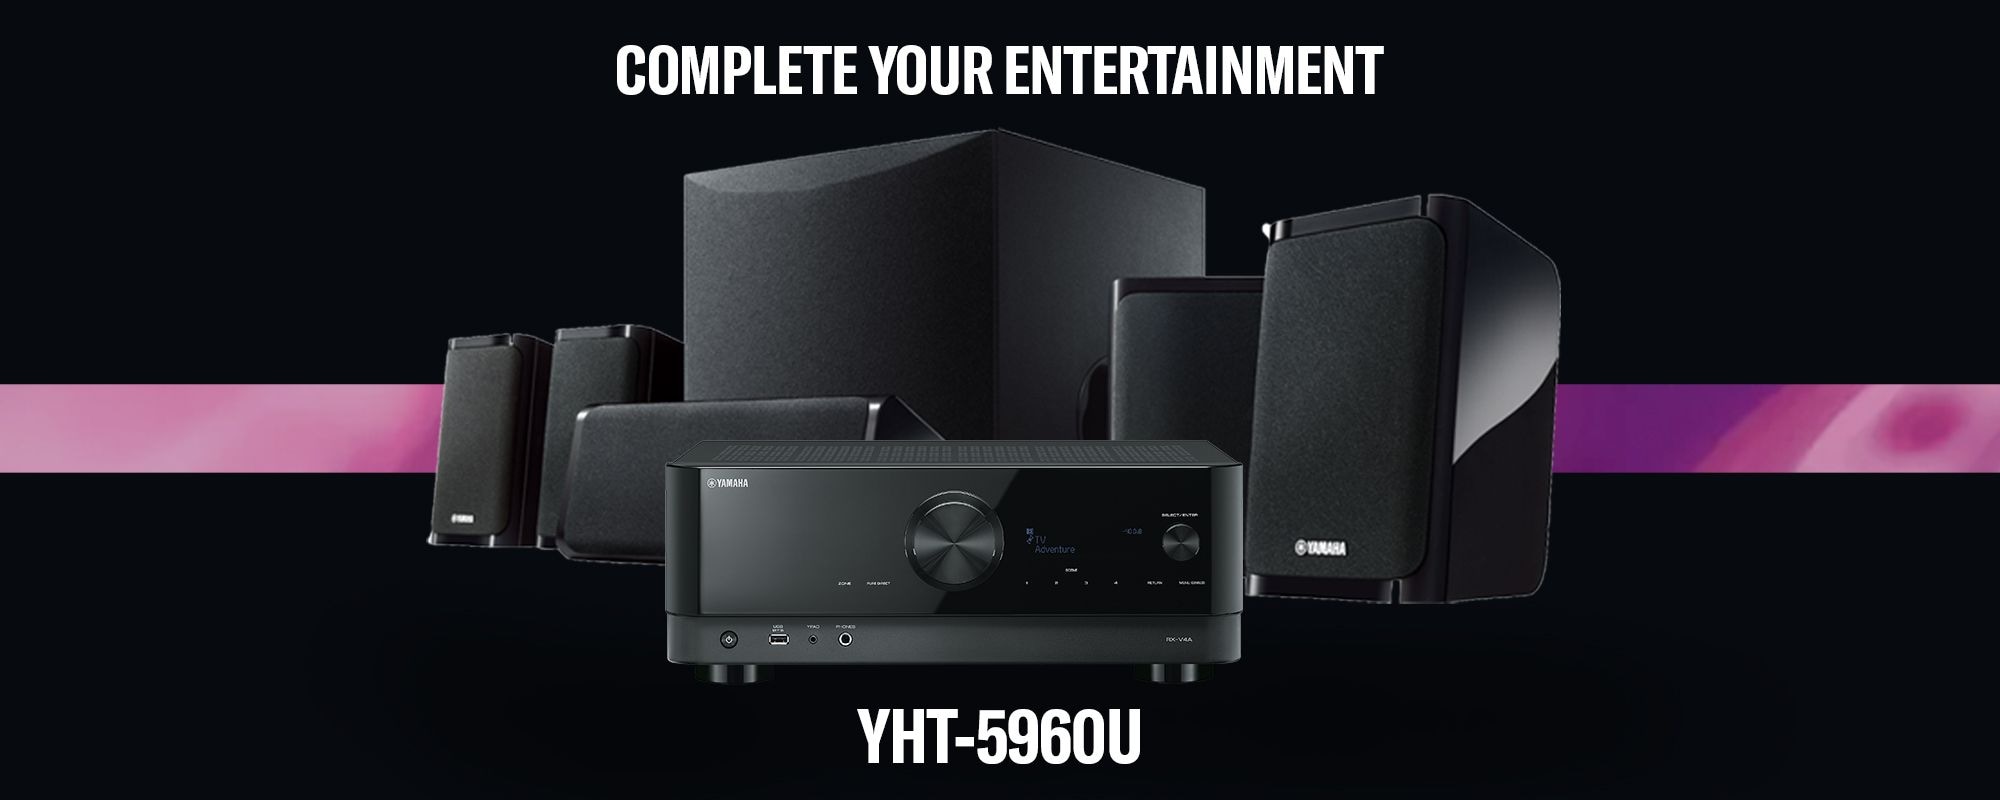 Complete Your Entertainment - Yamaha YHT-5960U Header - Desktop